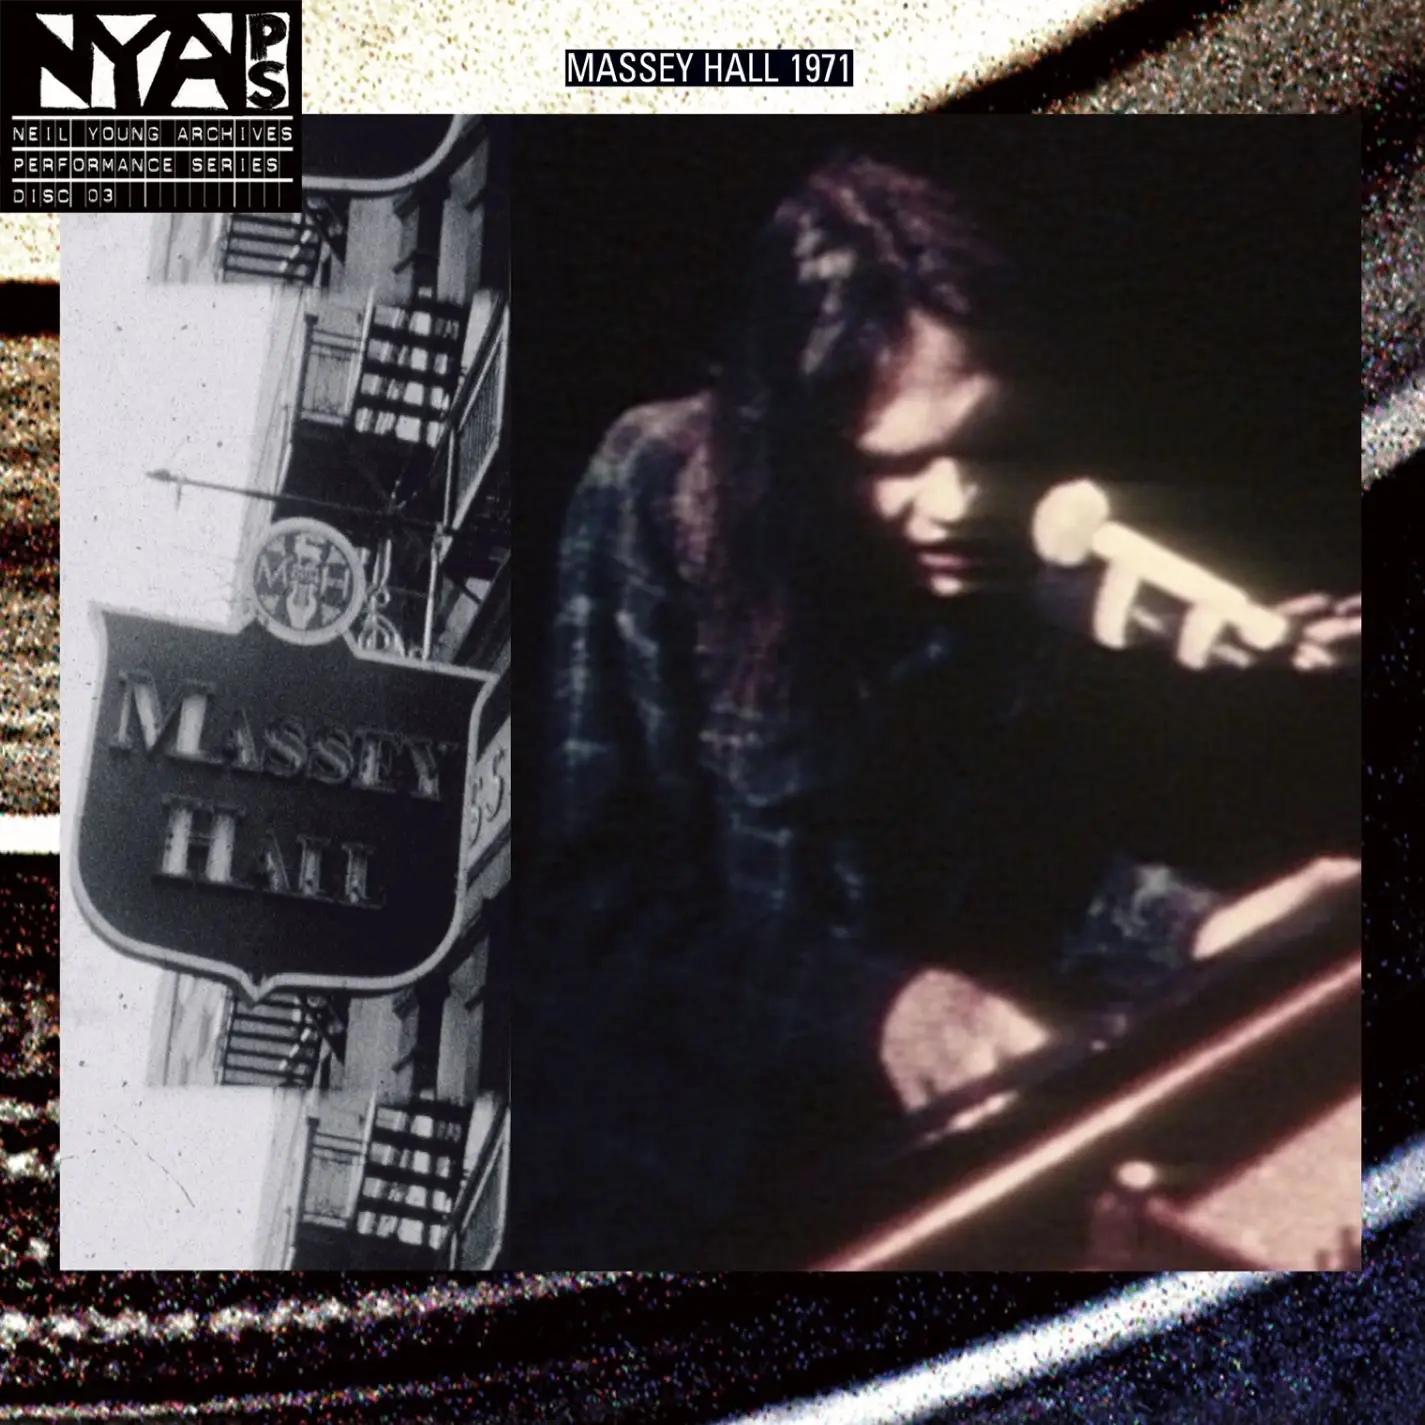 Neil Young - Massey Hall 1971 artwork